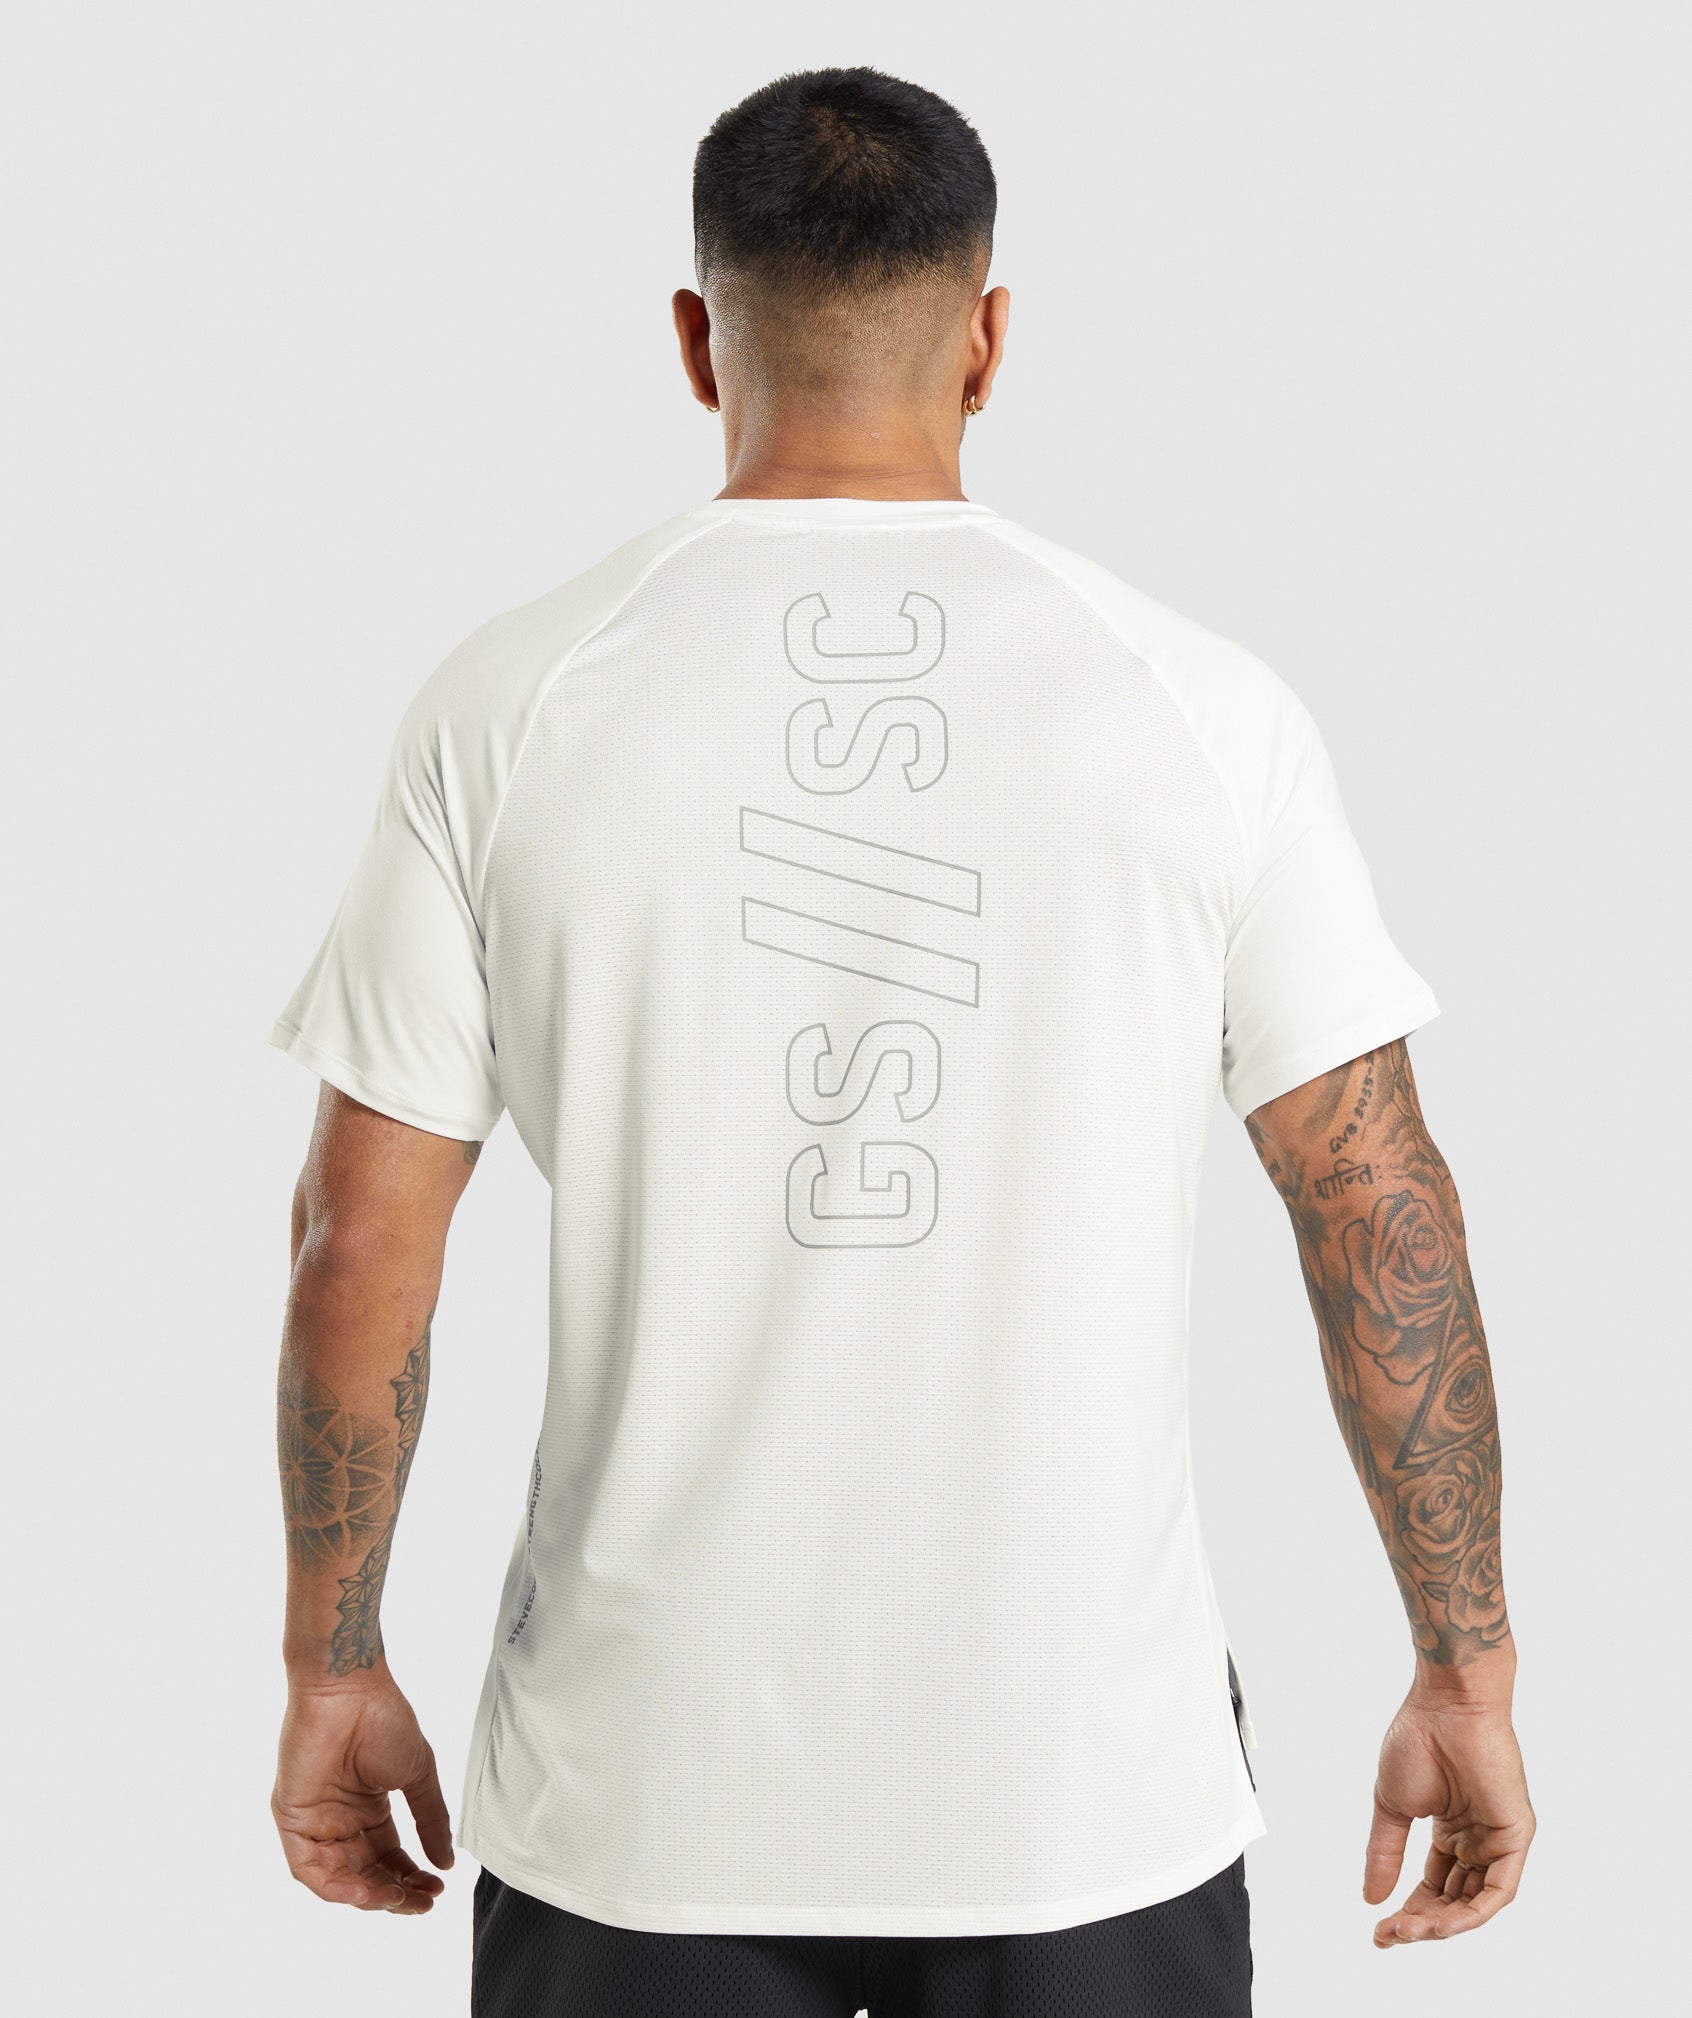 Gymshark//Steve Cook T-Shirt